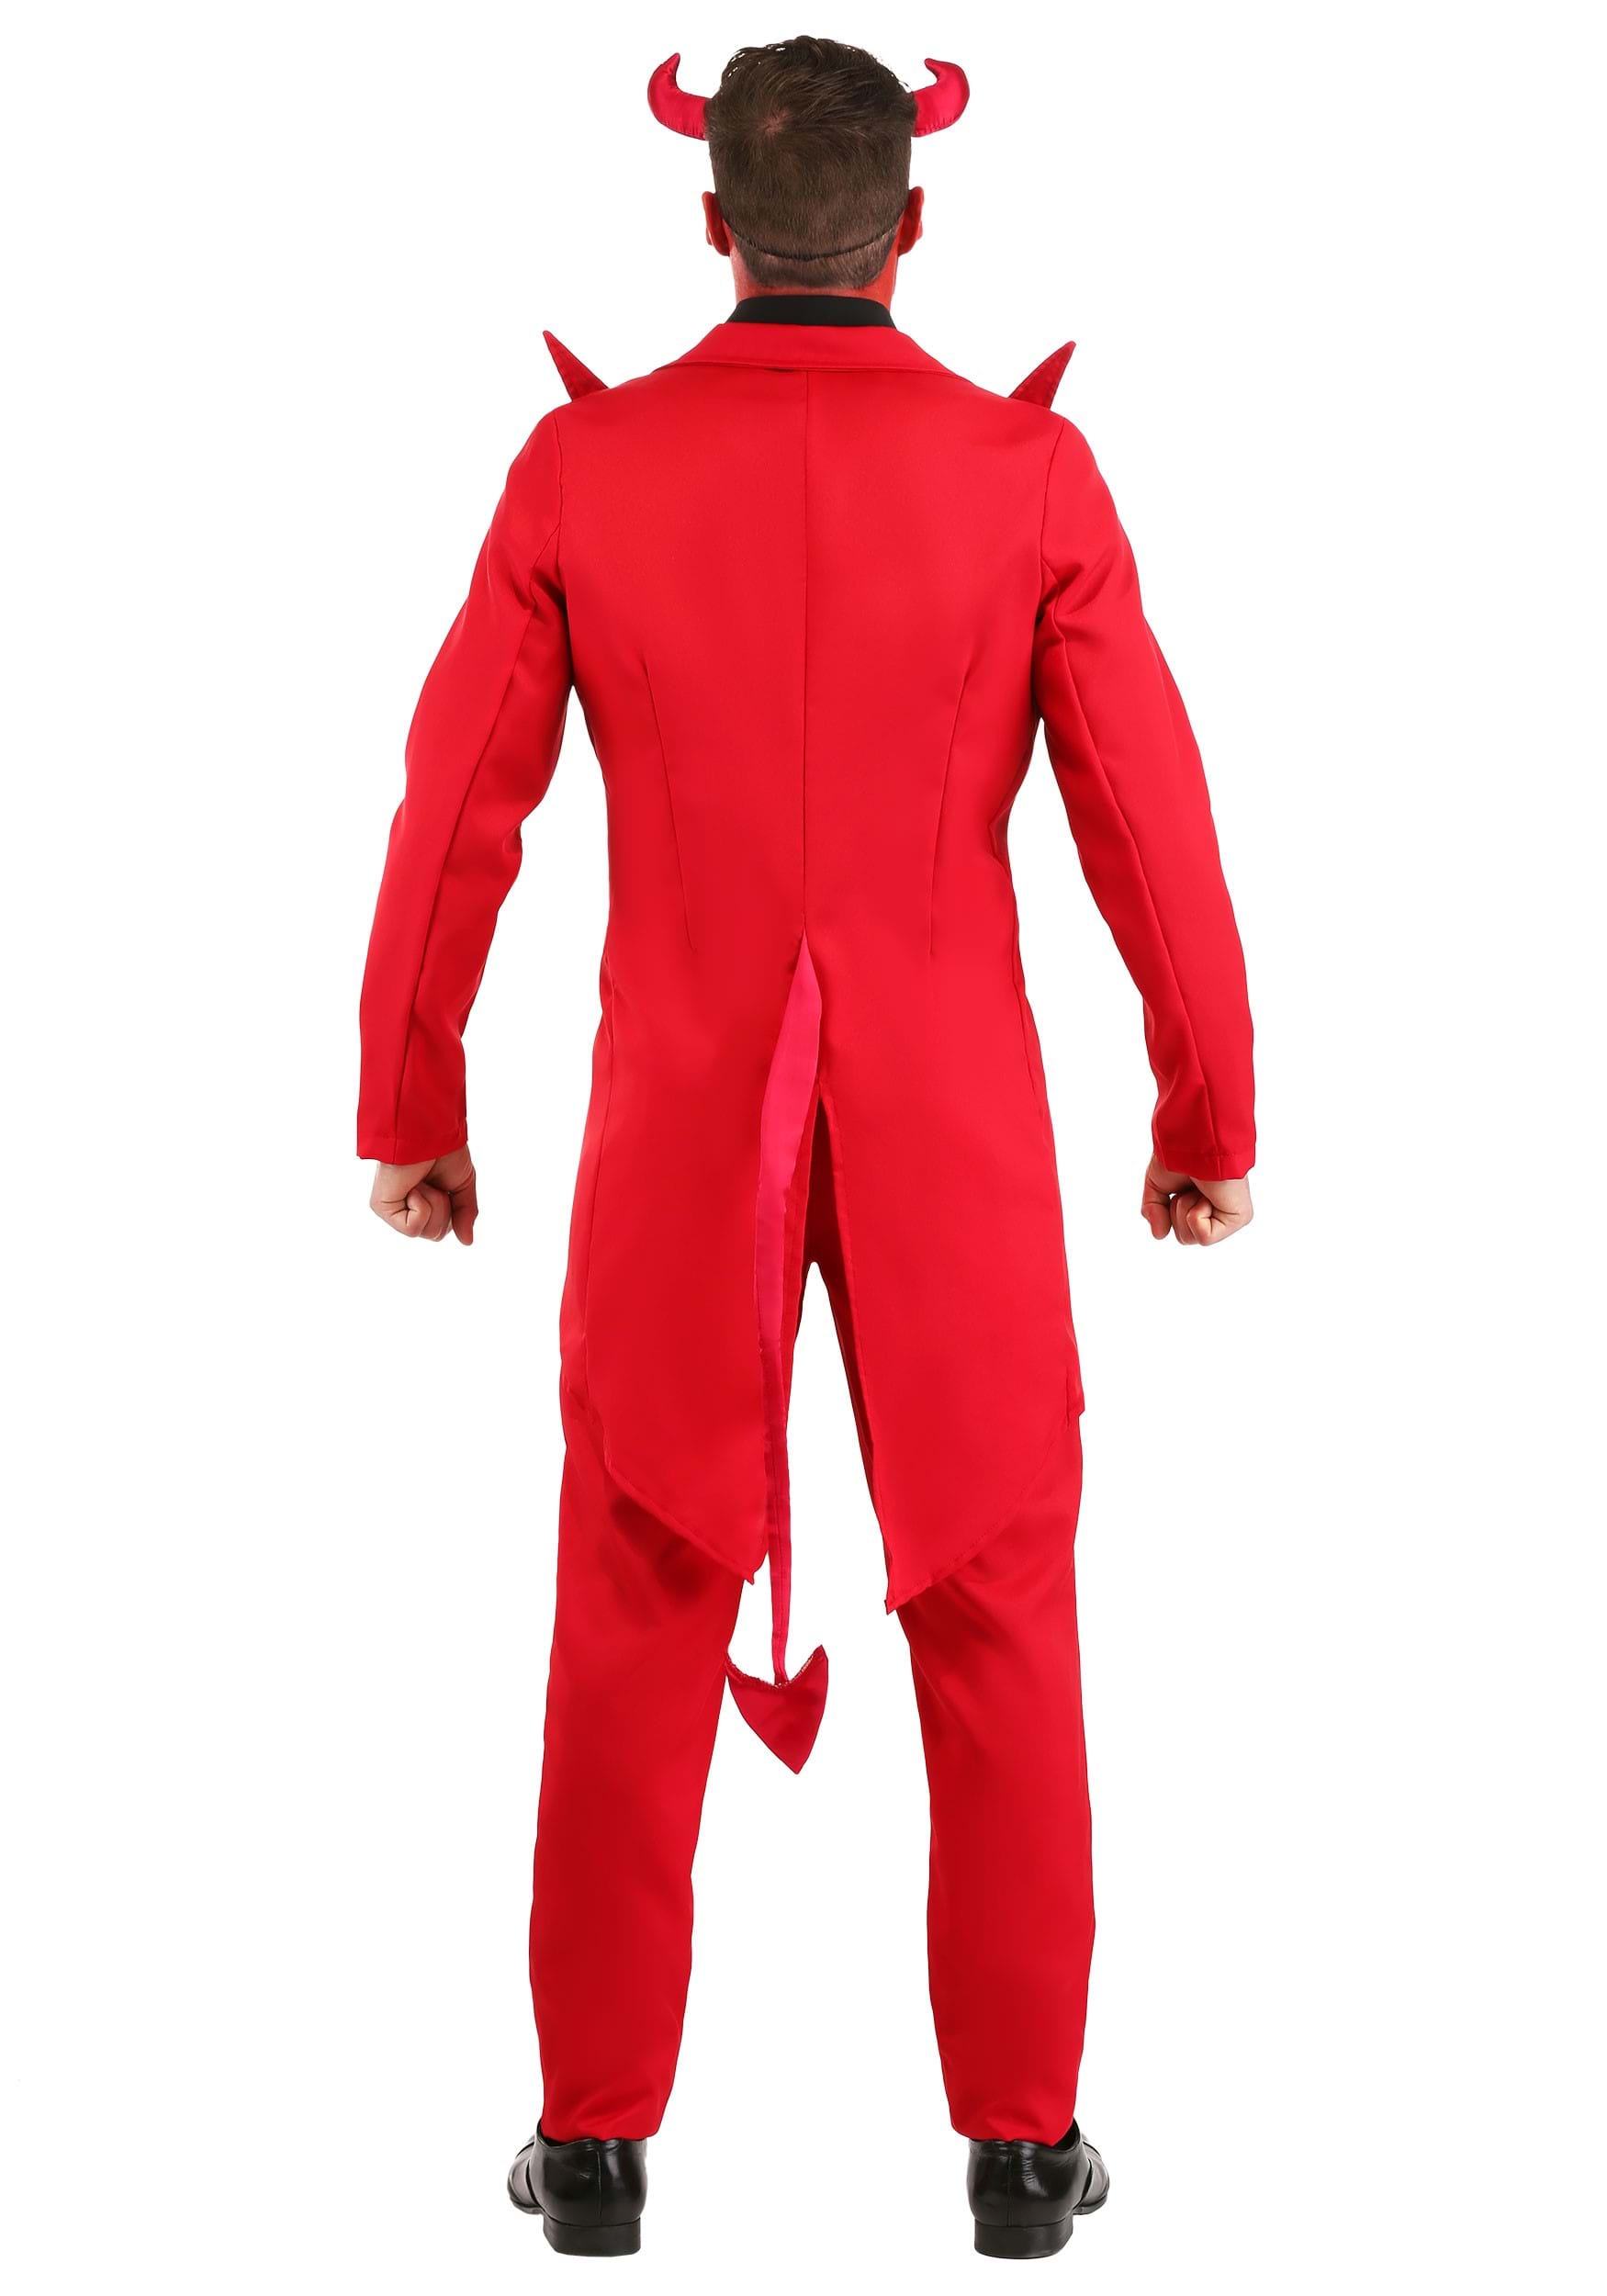 Red Suit Devil Costume For Men